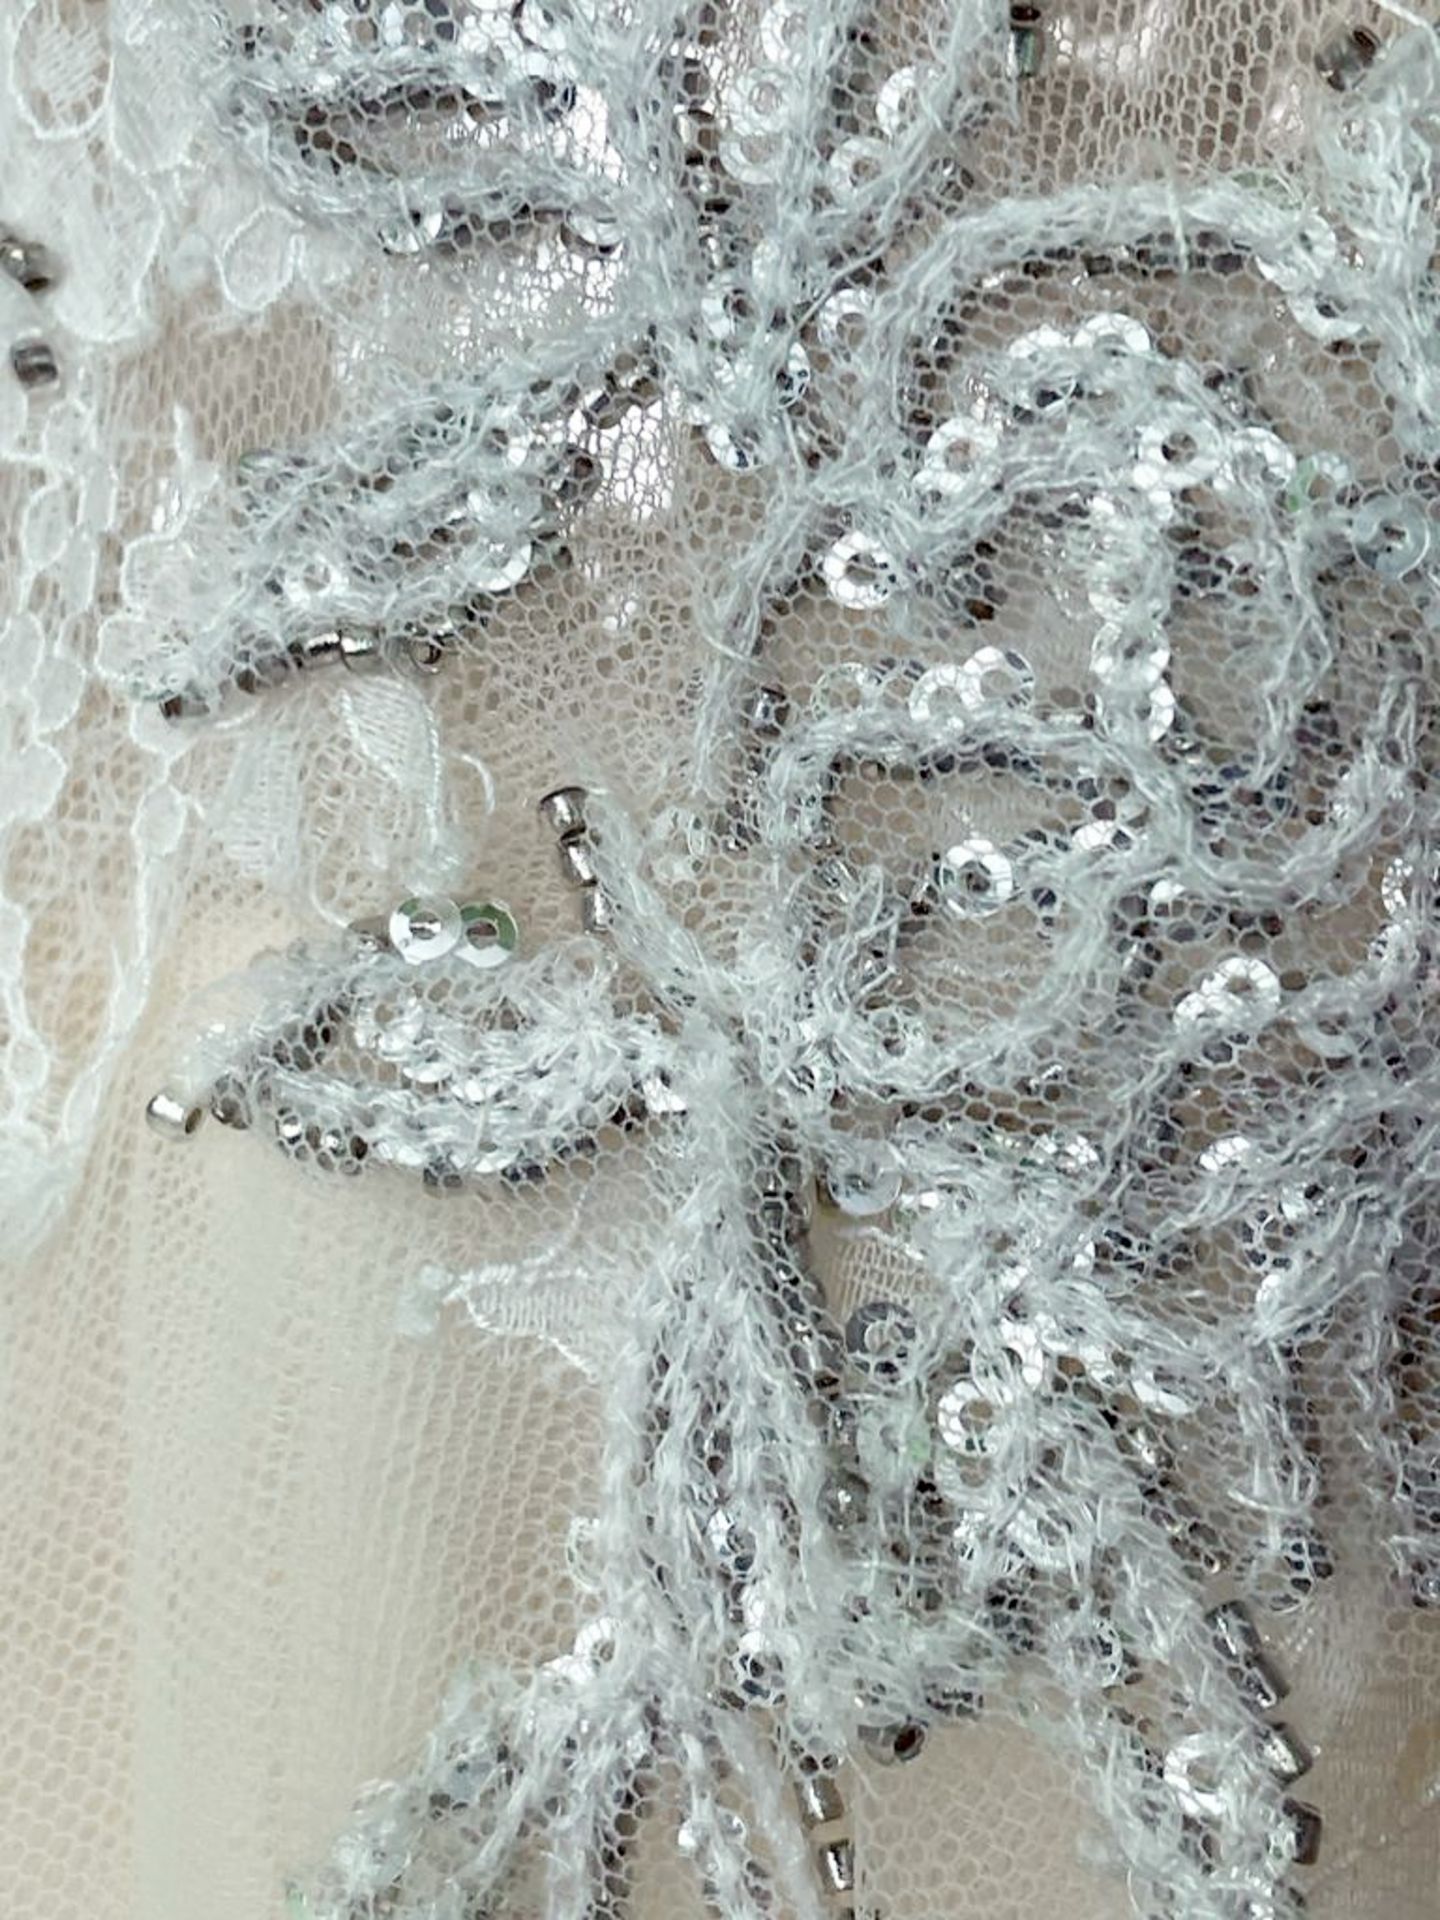 1 x ANNASUL Y 'Cameron' Designer Wedding Dress Bridal Gown - Size: UK 12 - Ref: DRS043 - CL823 - - Image 13 of 13